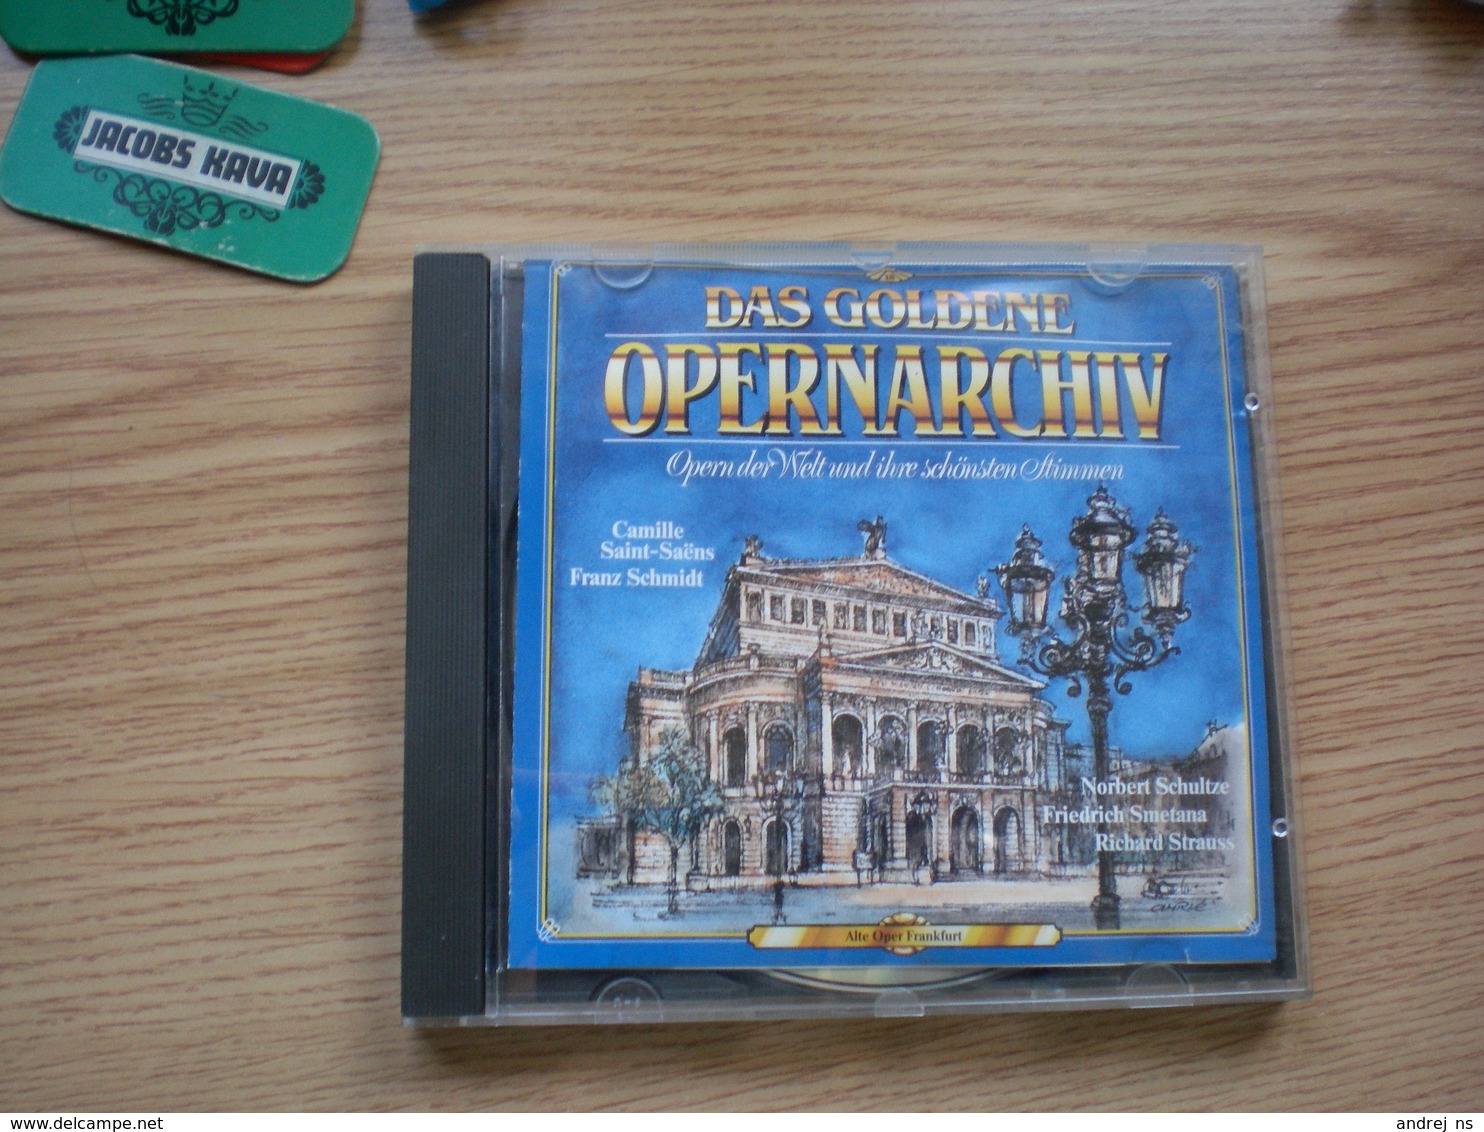 Das Goldene Opernarchiv - Opera